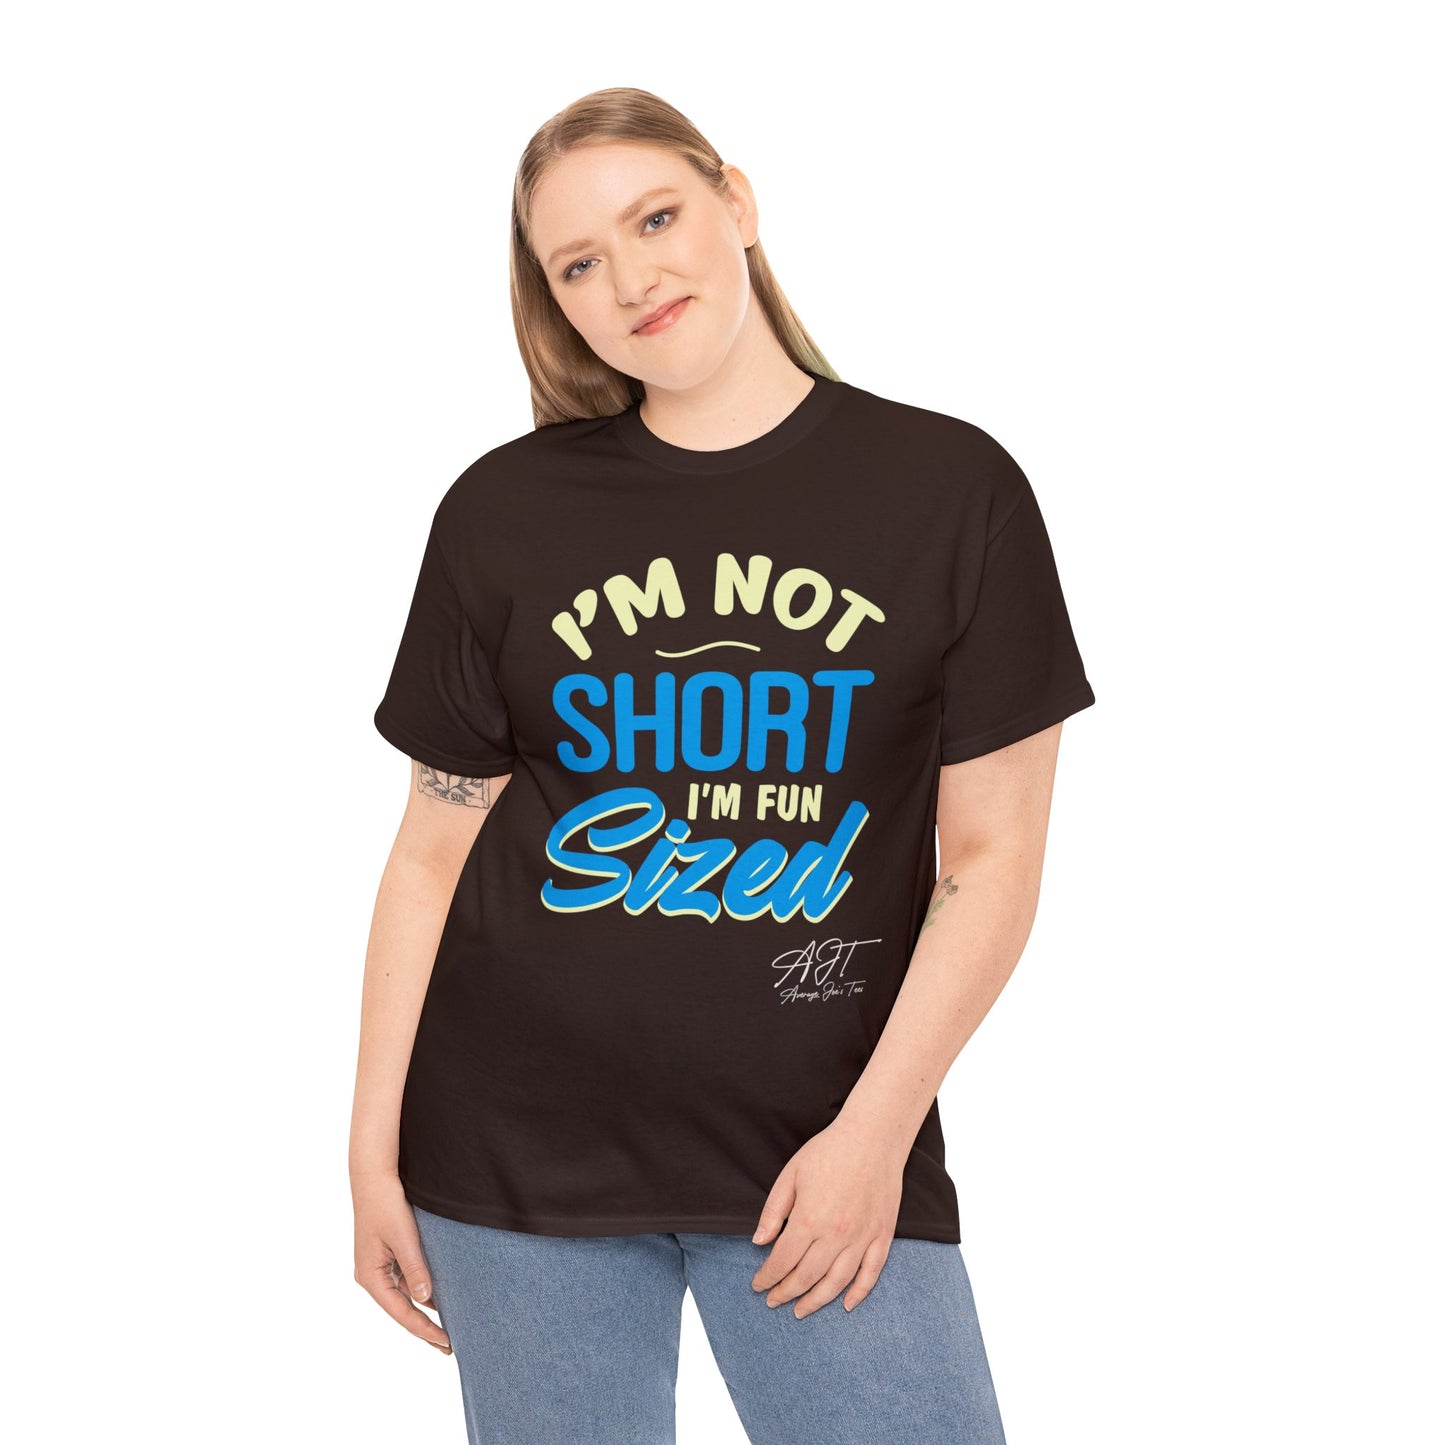 "I'm Not Short" Cotton Tee